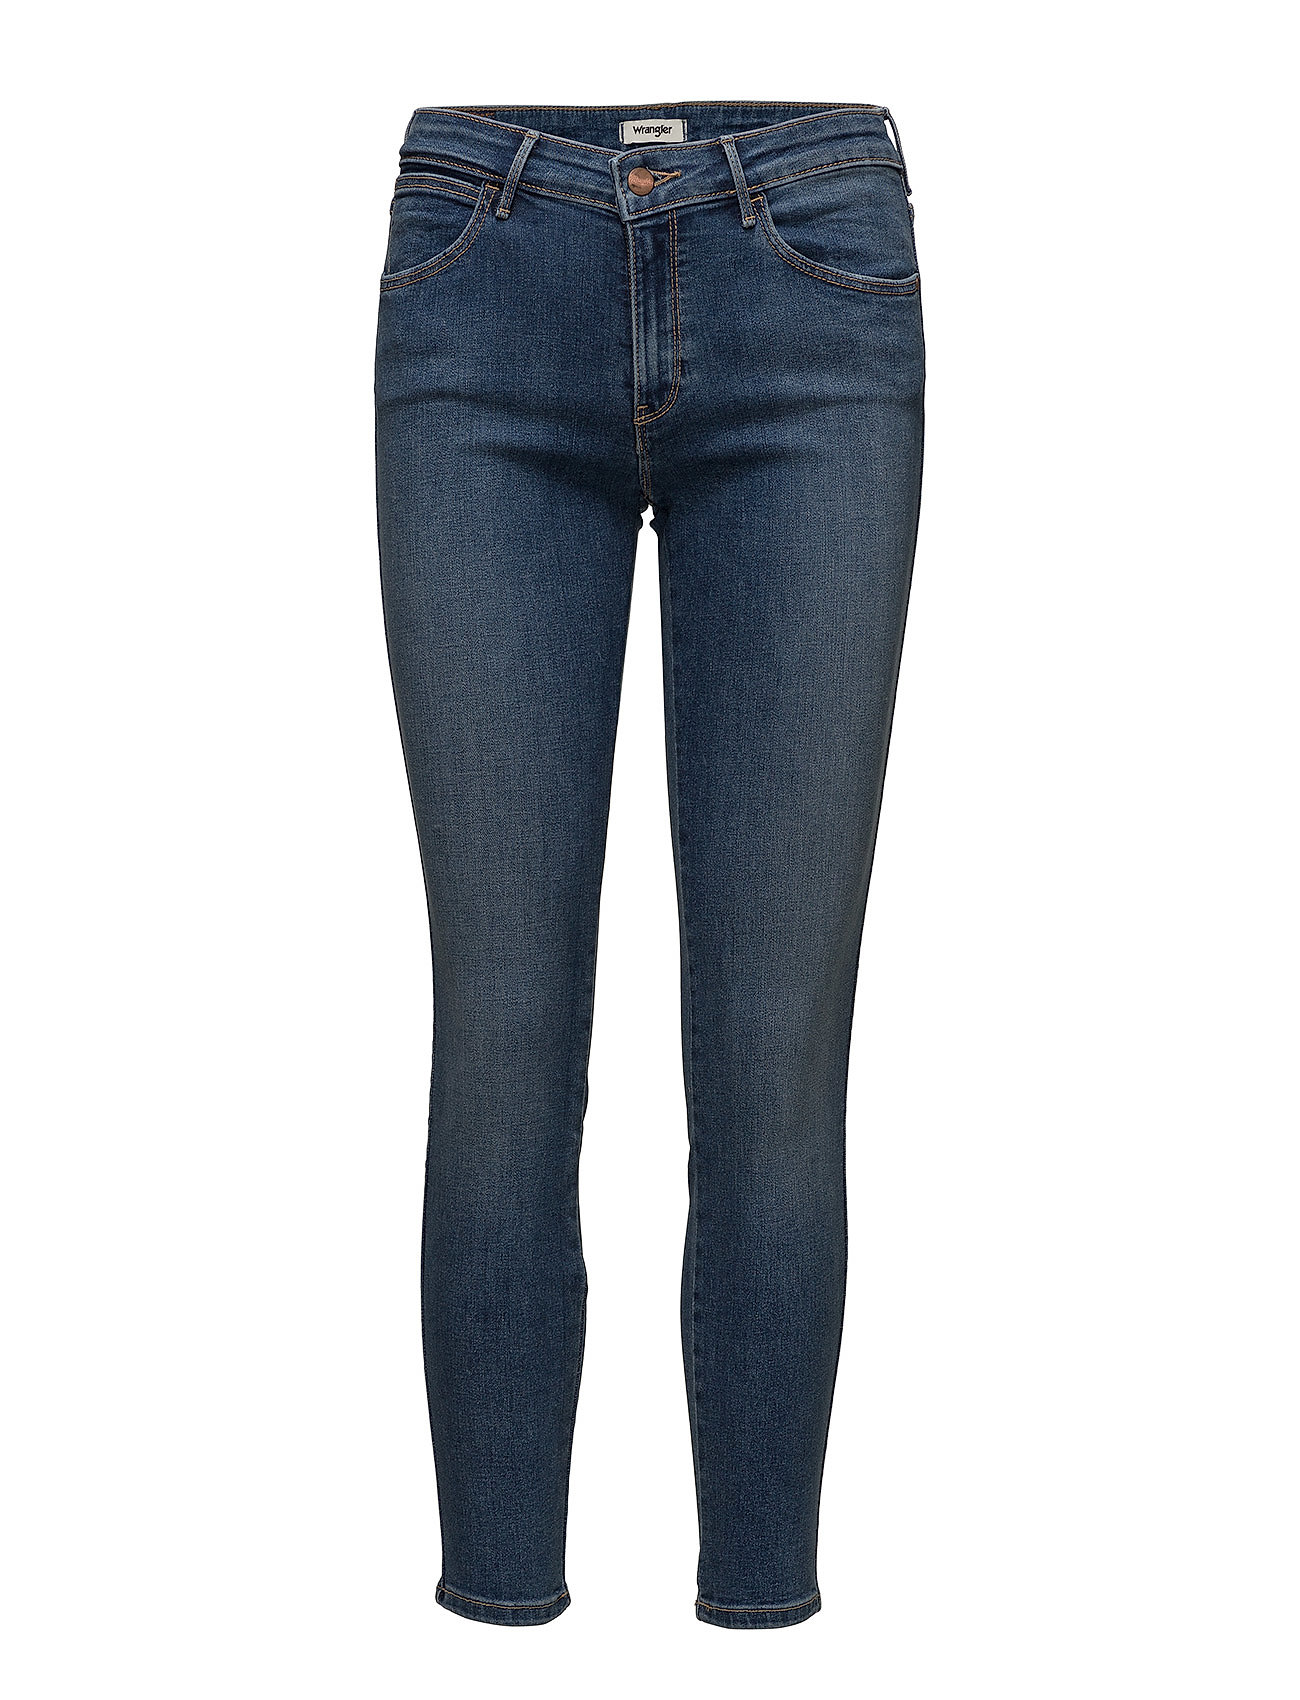 Skinny Jeans Perfect Blue £4794 Wrangler